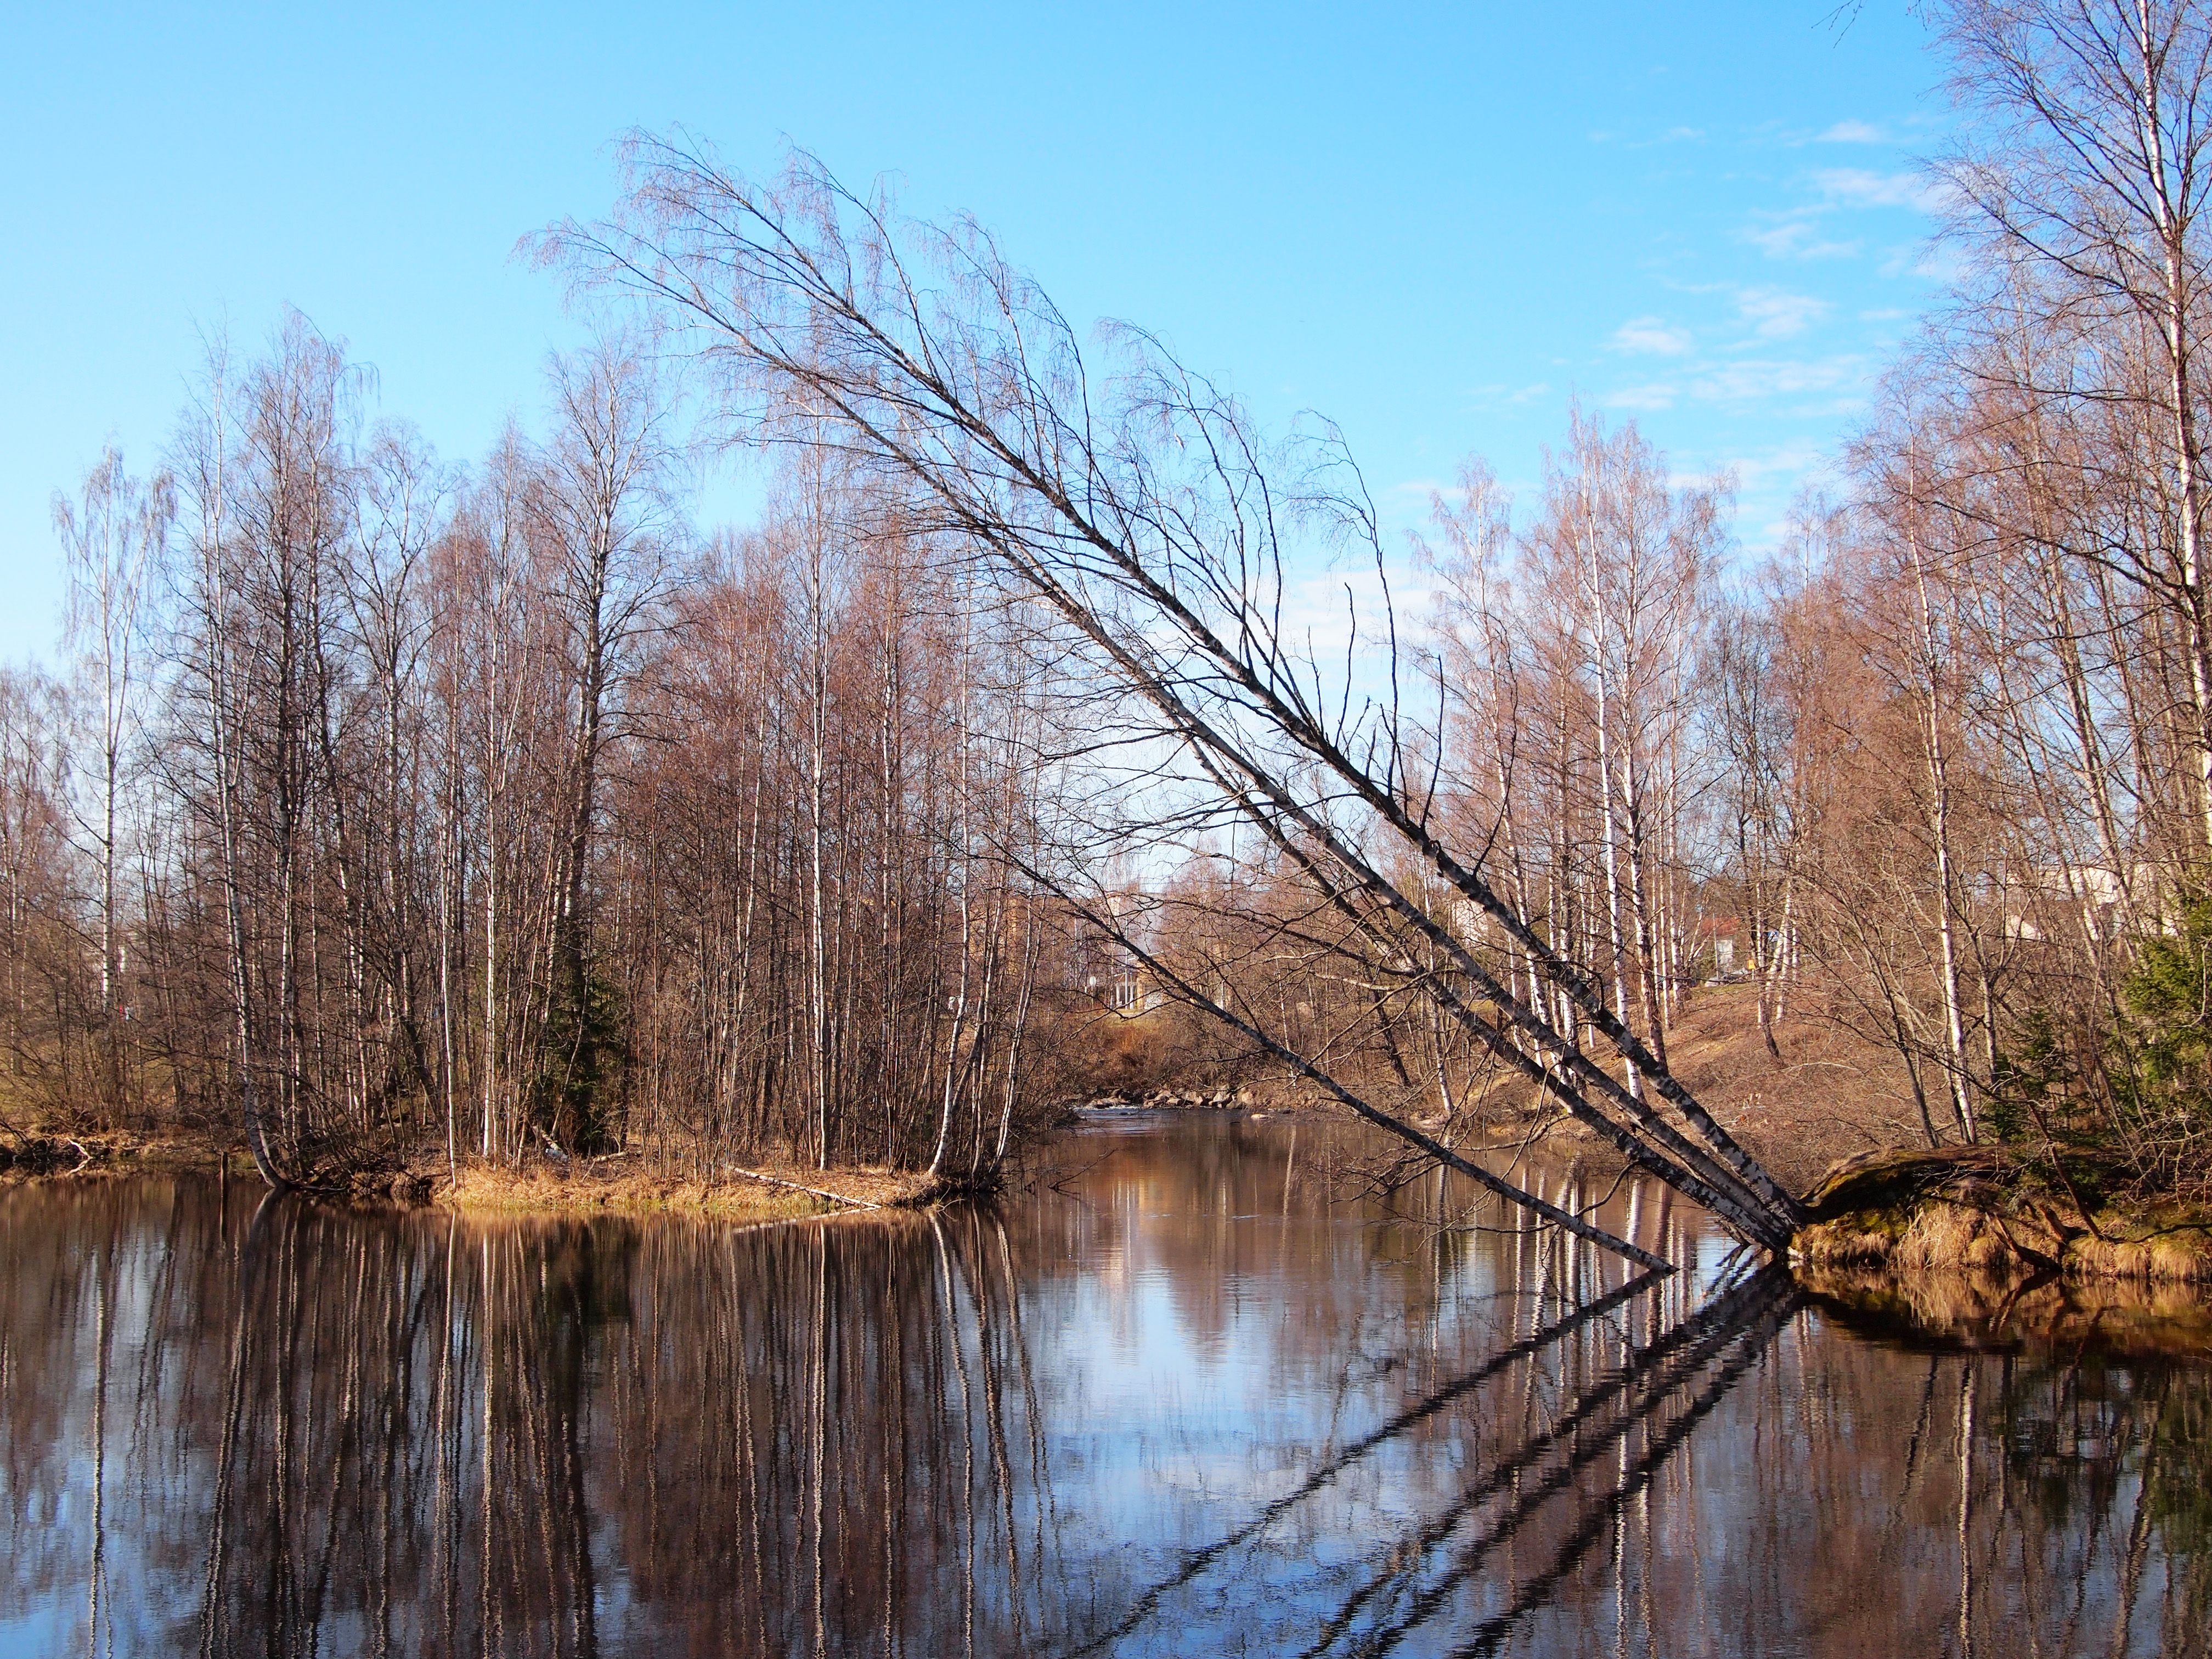 File:Muuramenjoki tilted tree.jpg - Wikimedia Commons